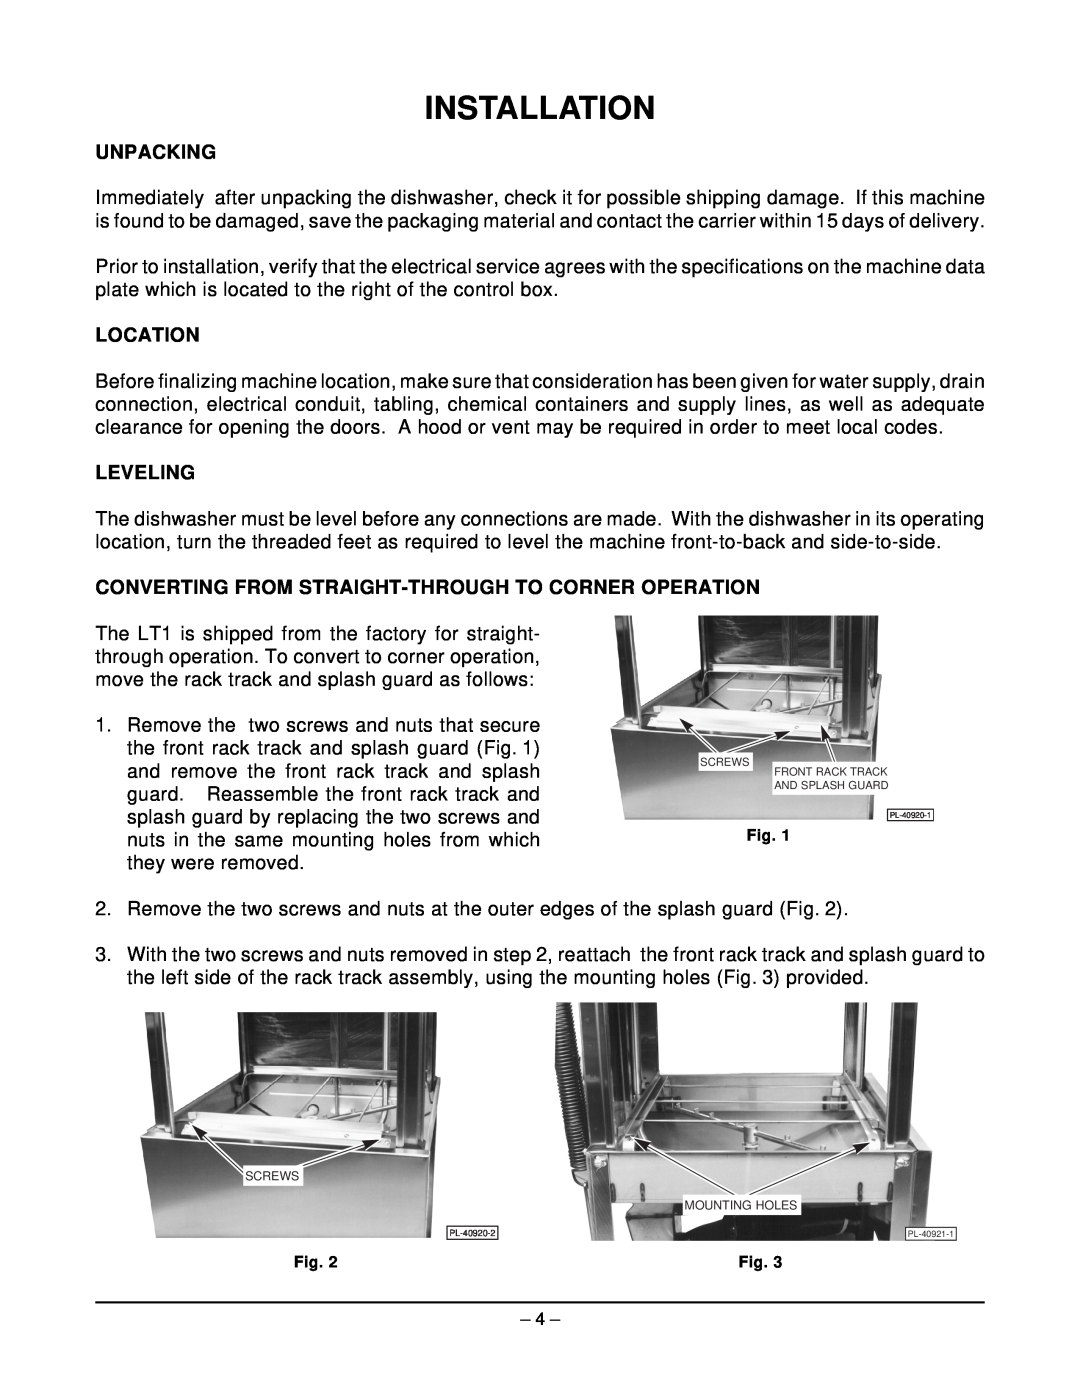 Hobart LT1 ML-104239 manual Installation, Unpacking, Location, Leveling 